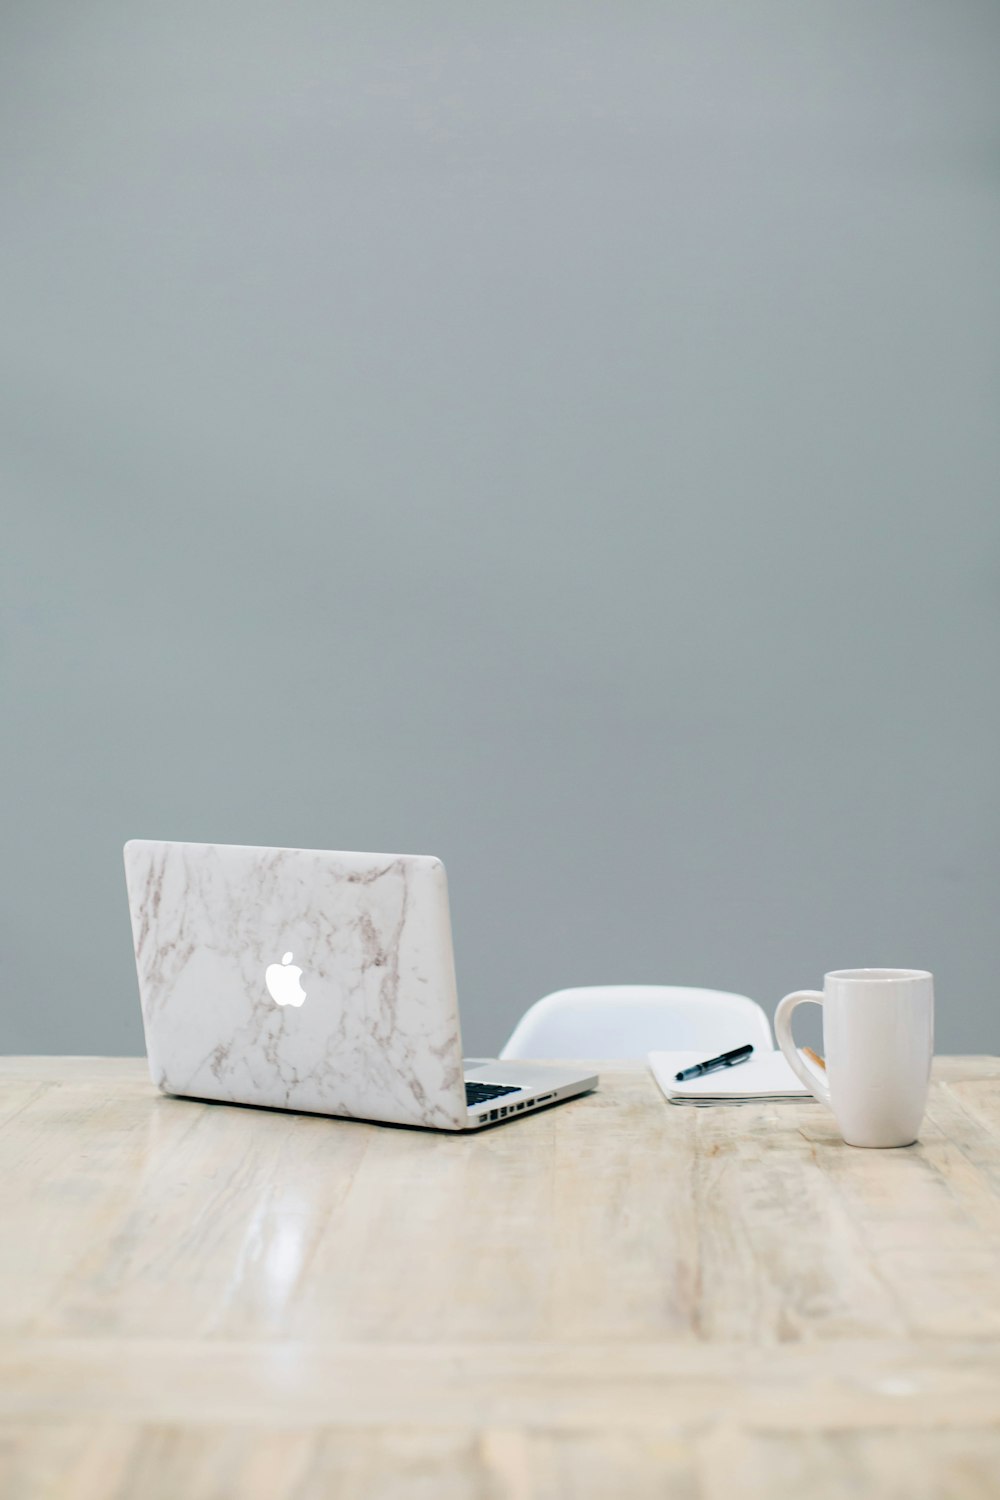 MacBook on table near mug